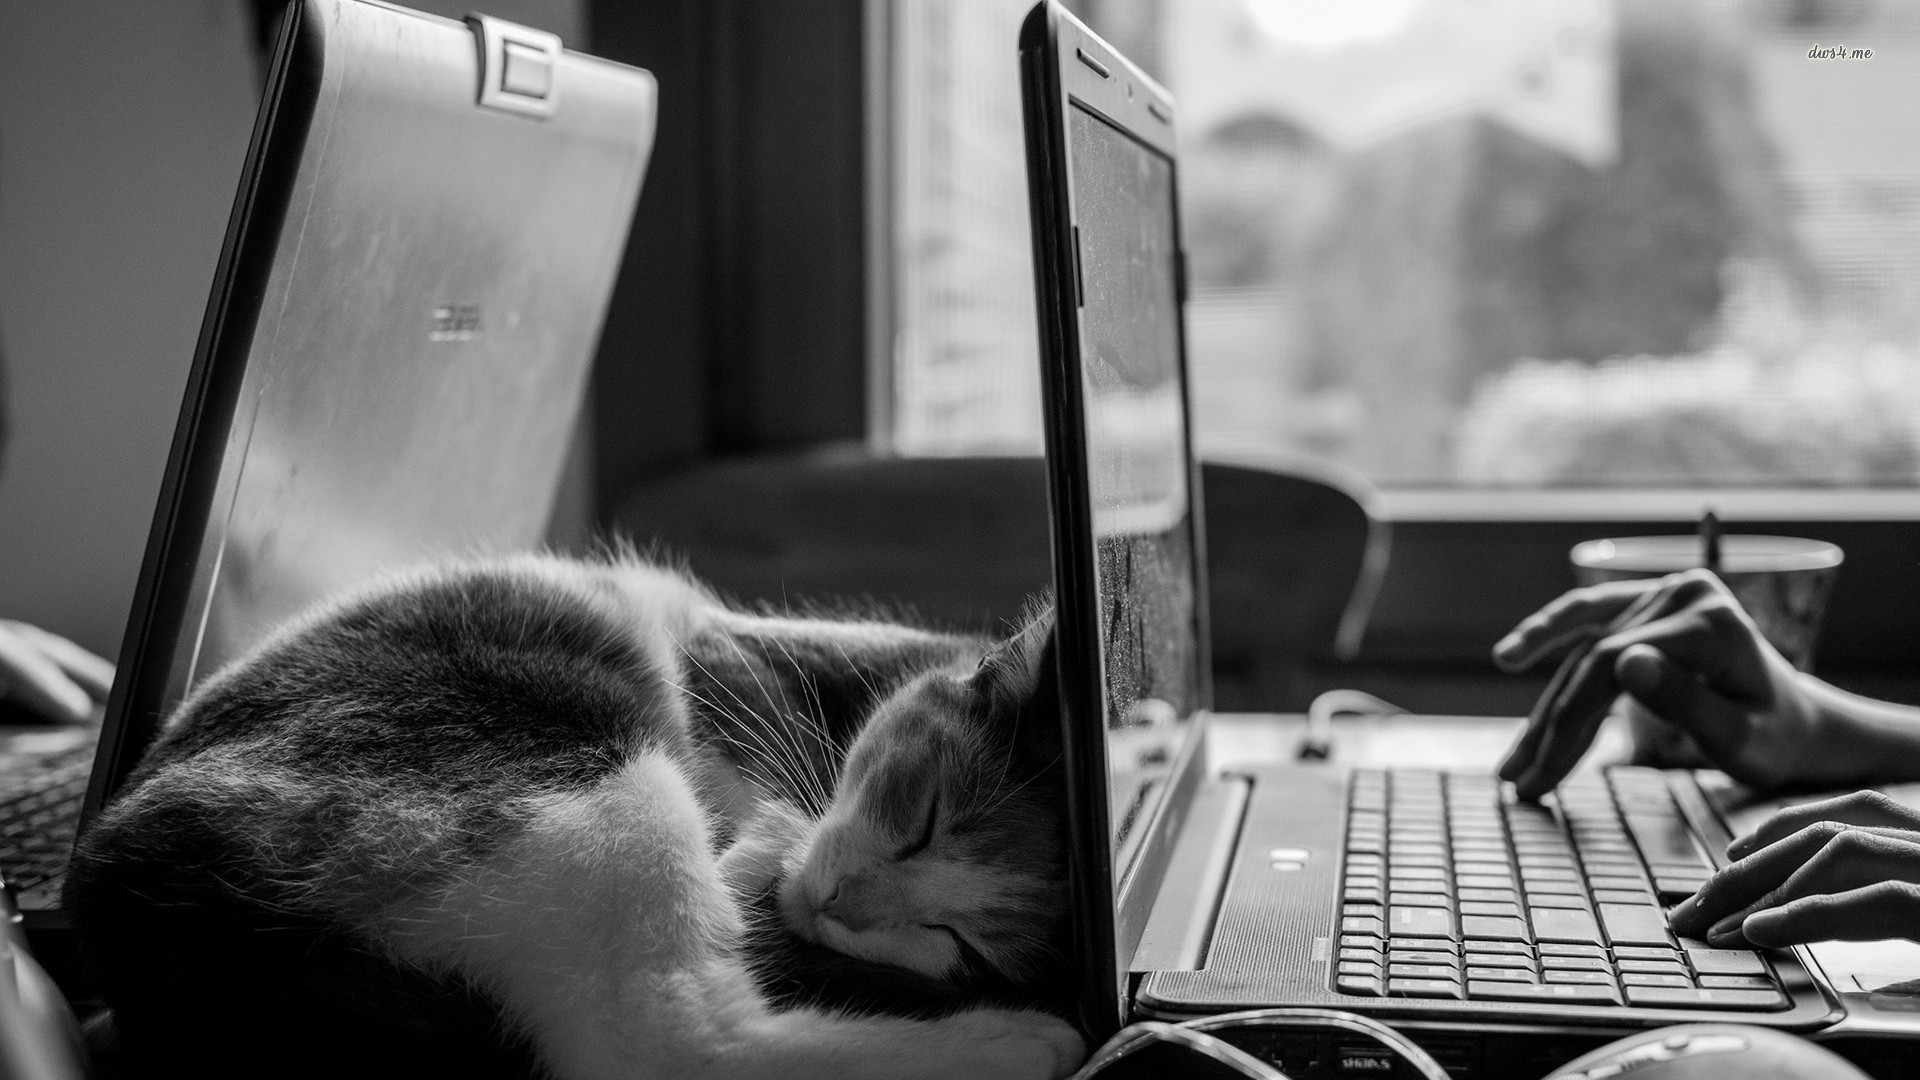 General 1920x1080 photography animals cats monochrome mammals laptop hands indoors sleeping technology